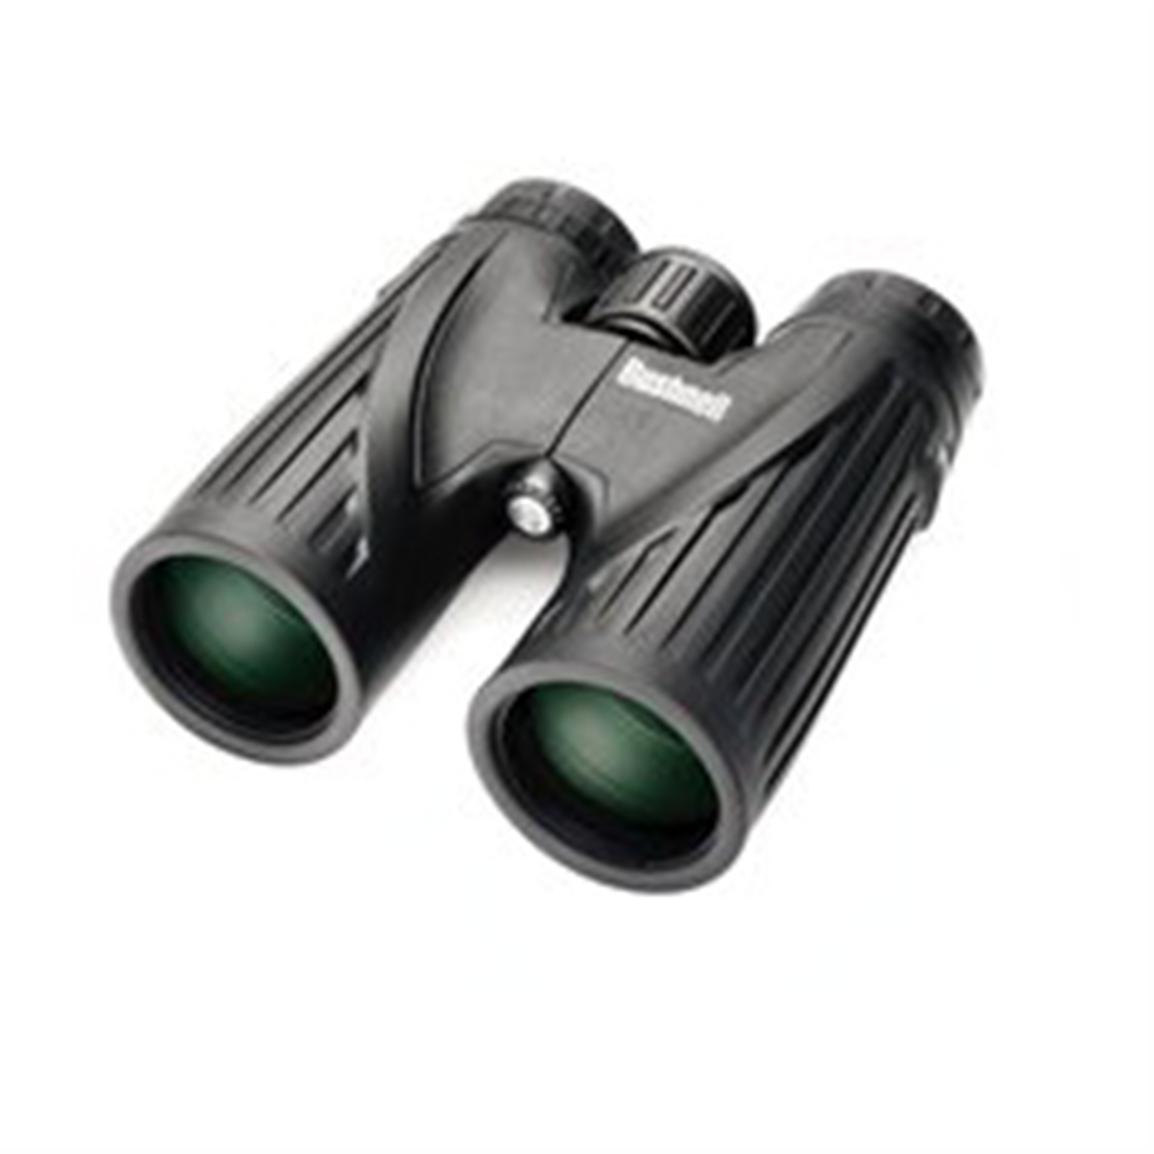 bushnell-legend-ultra-hd-8x42-mm-binoculars-191086-binoculars